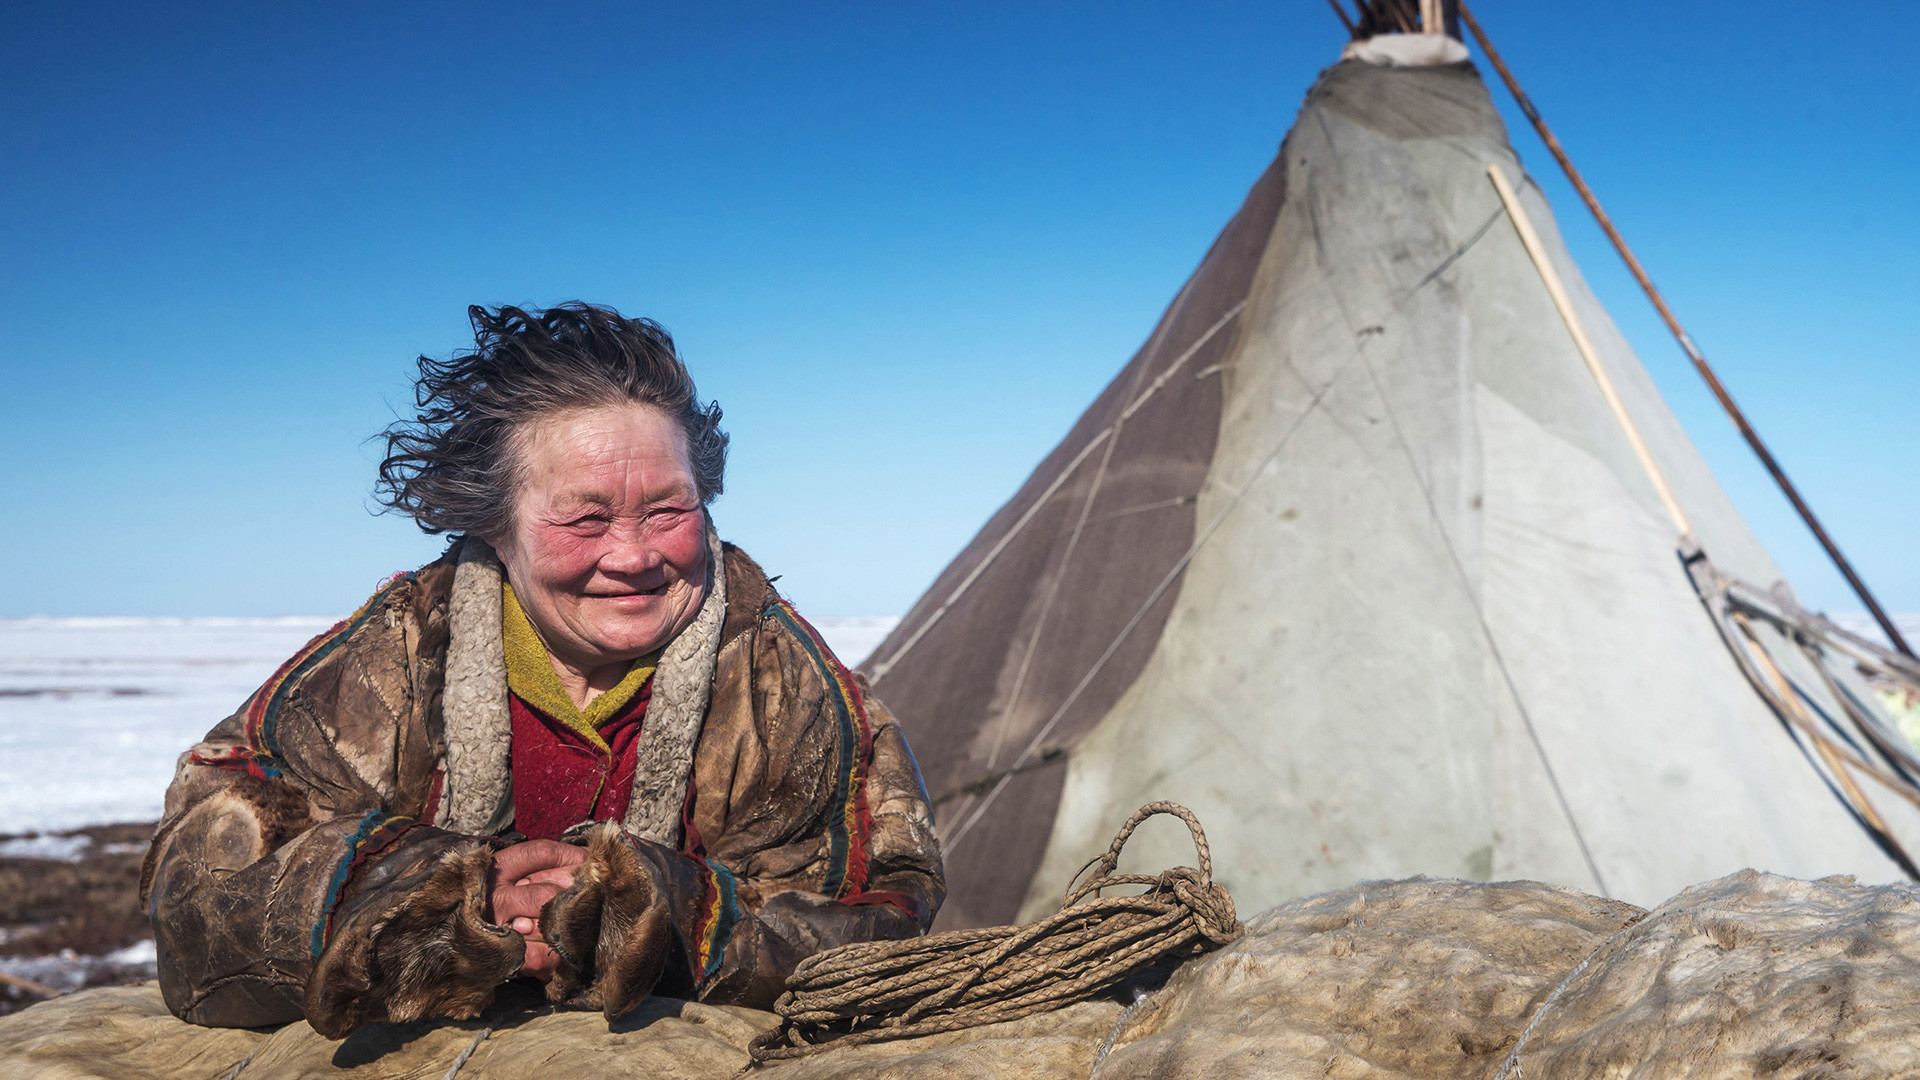 Femme nomade en Iamalie, 2016